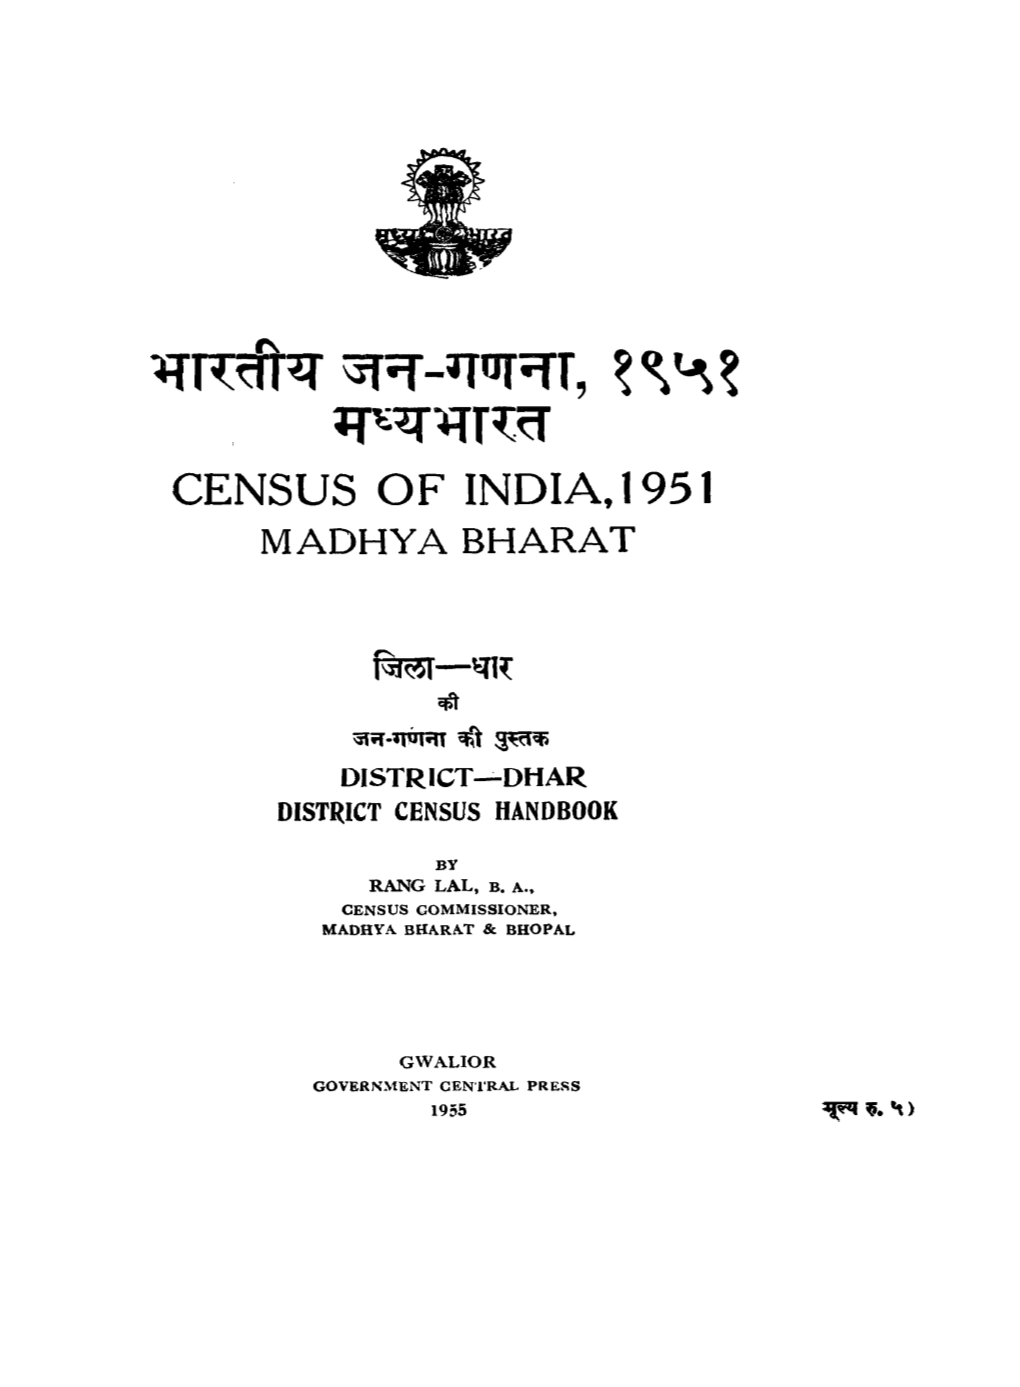 District Census Handbook, Dhar, Madhya Pradesh